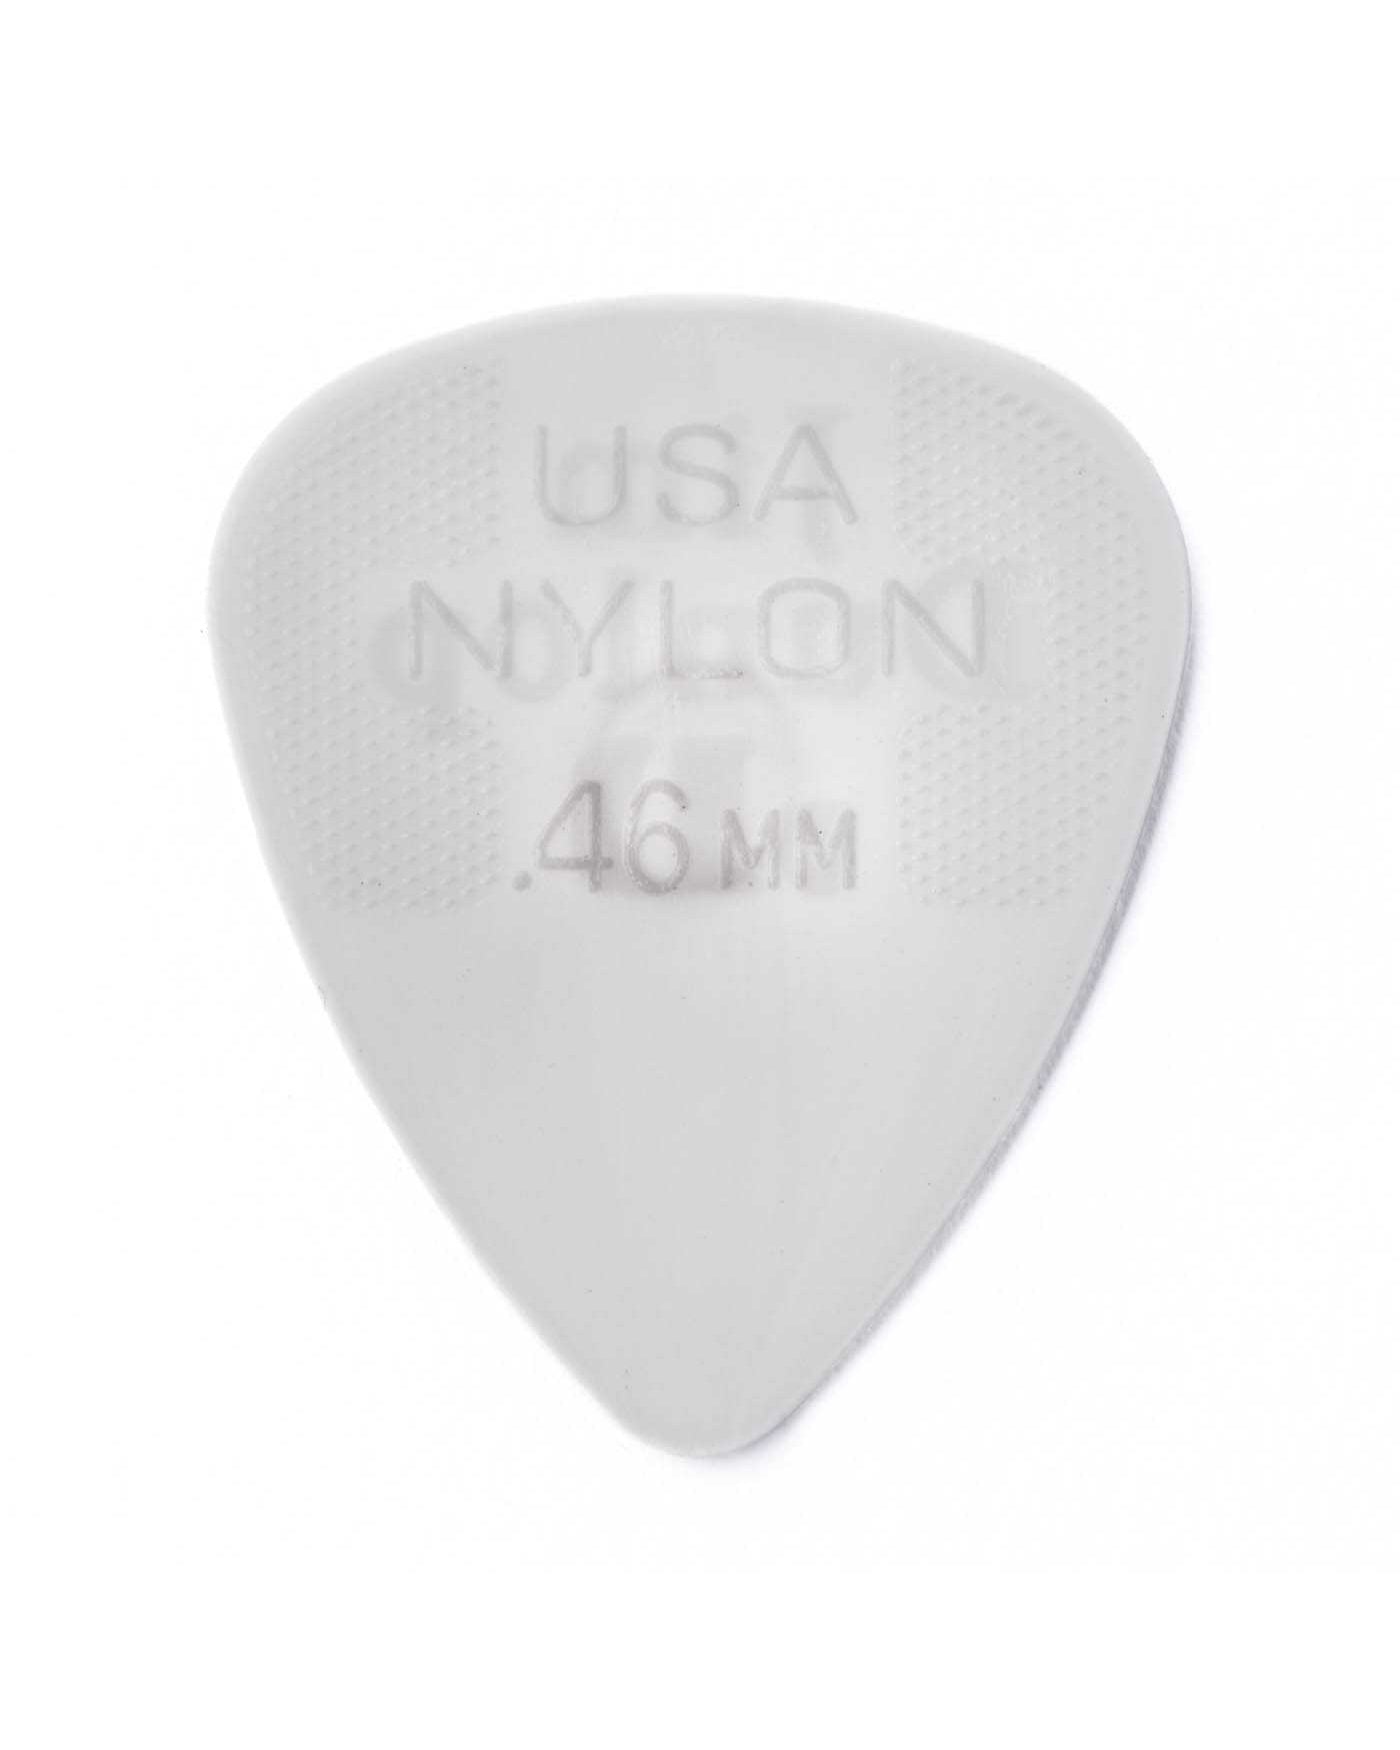 Image 1 of Dunlop Nylon Standard .46MM Flatpick Player's Pack, 12 Picks - SKU# PK12P-46 : Product Type Accessories & Parts : Elderly Instruments